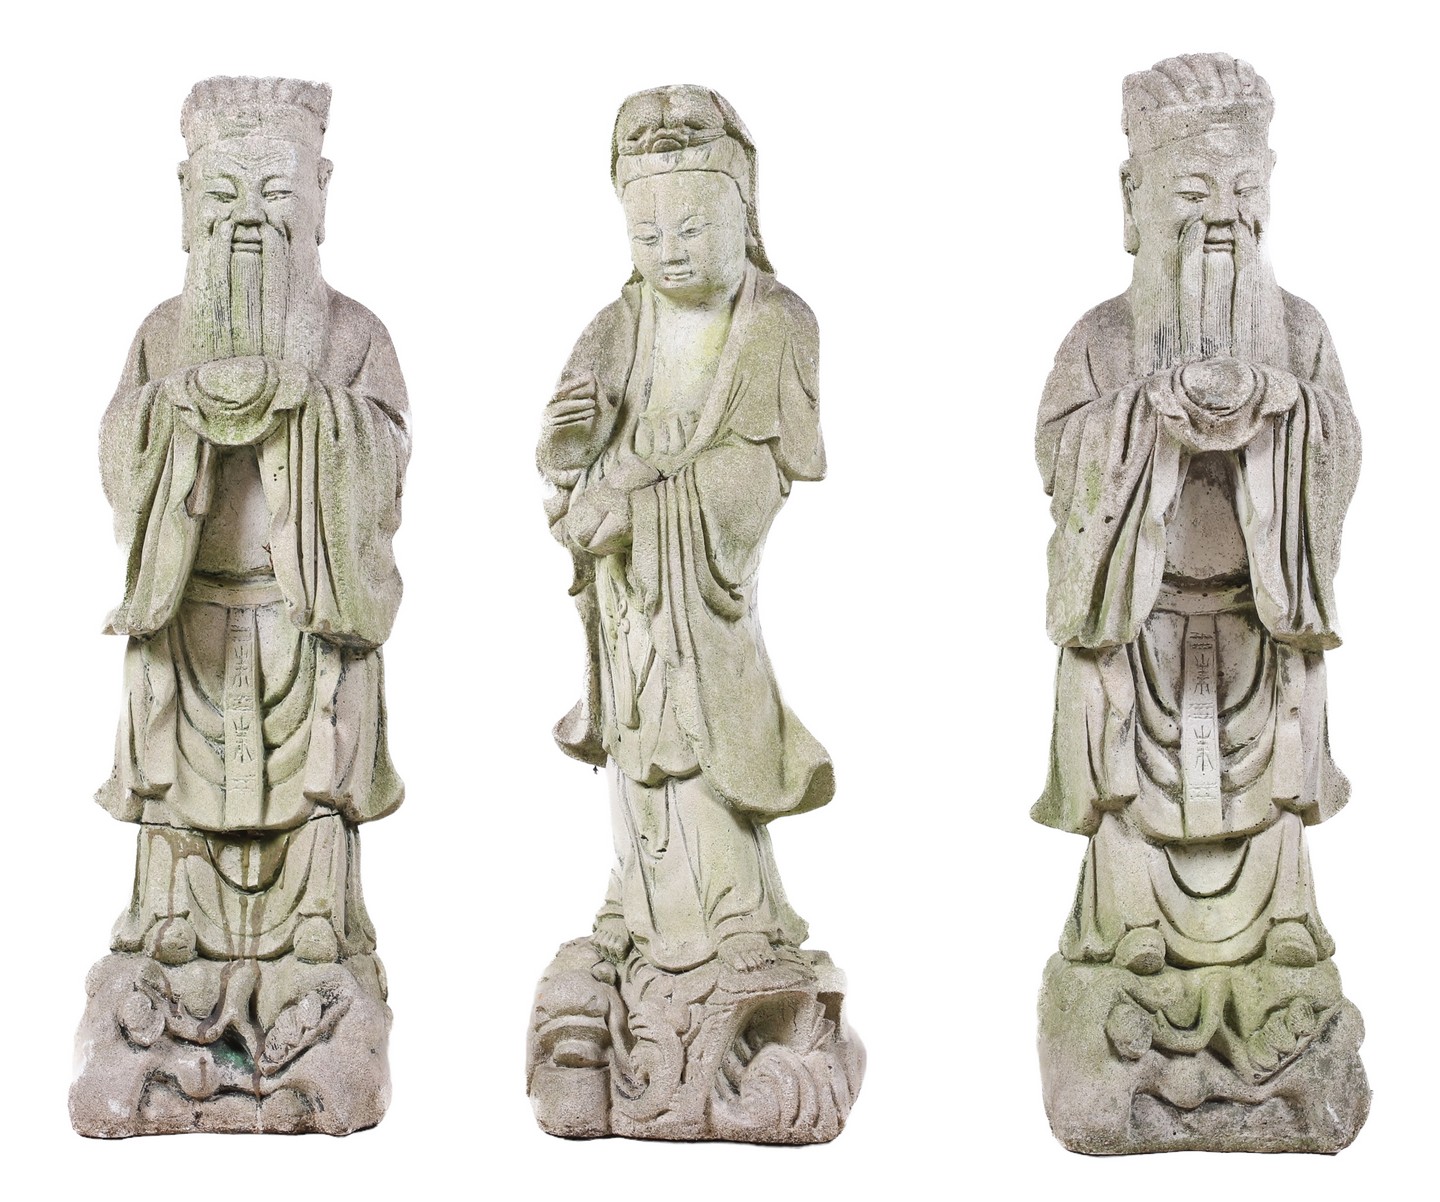  3 Cement Asian figural statues  2e0591